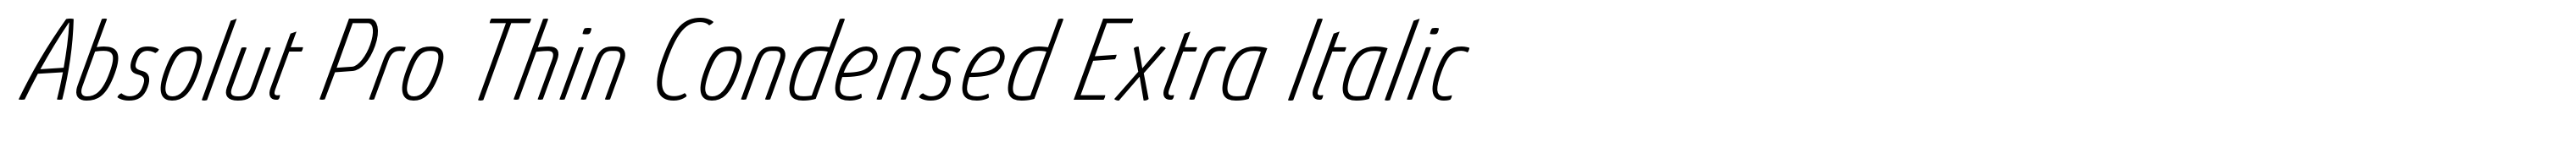 Absolut Pro Thin Condensed Extra Italic